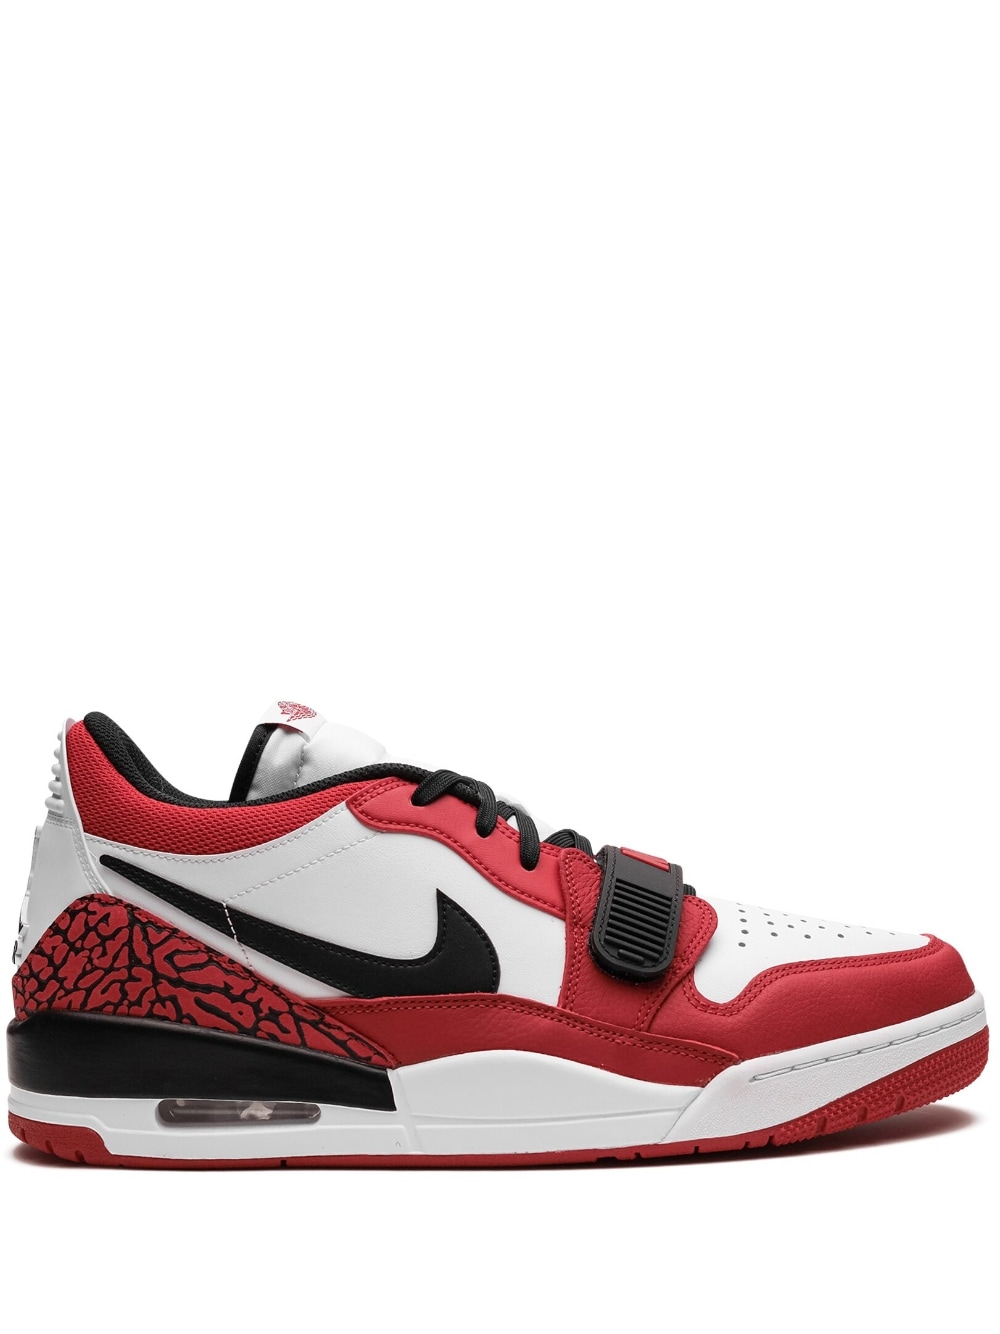 Jordan Jordan Legacy 312 Low "White/Varsity Red/Black" sneakers